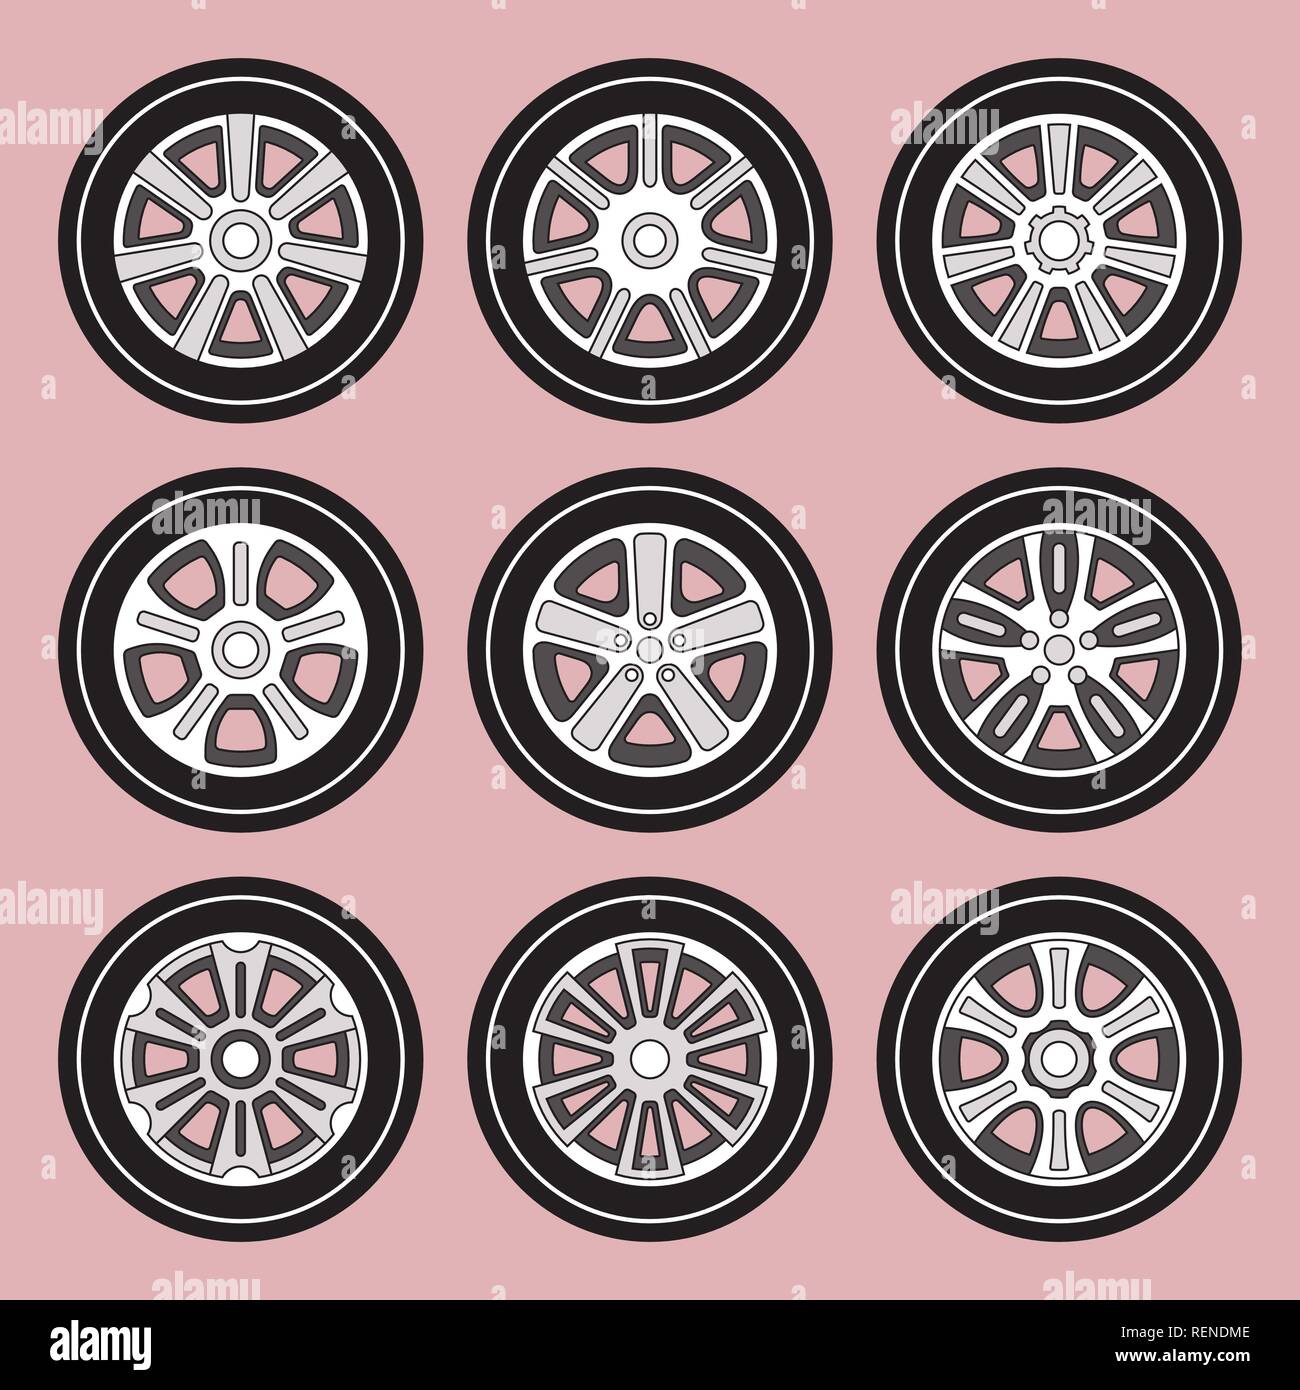 Car wheel icon set. Vector illustration Stock Vector